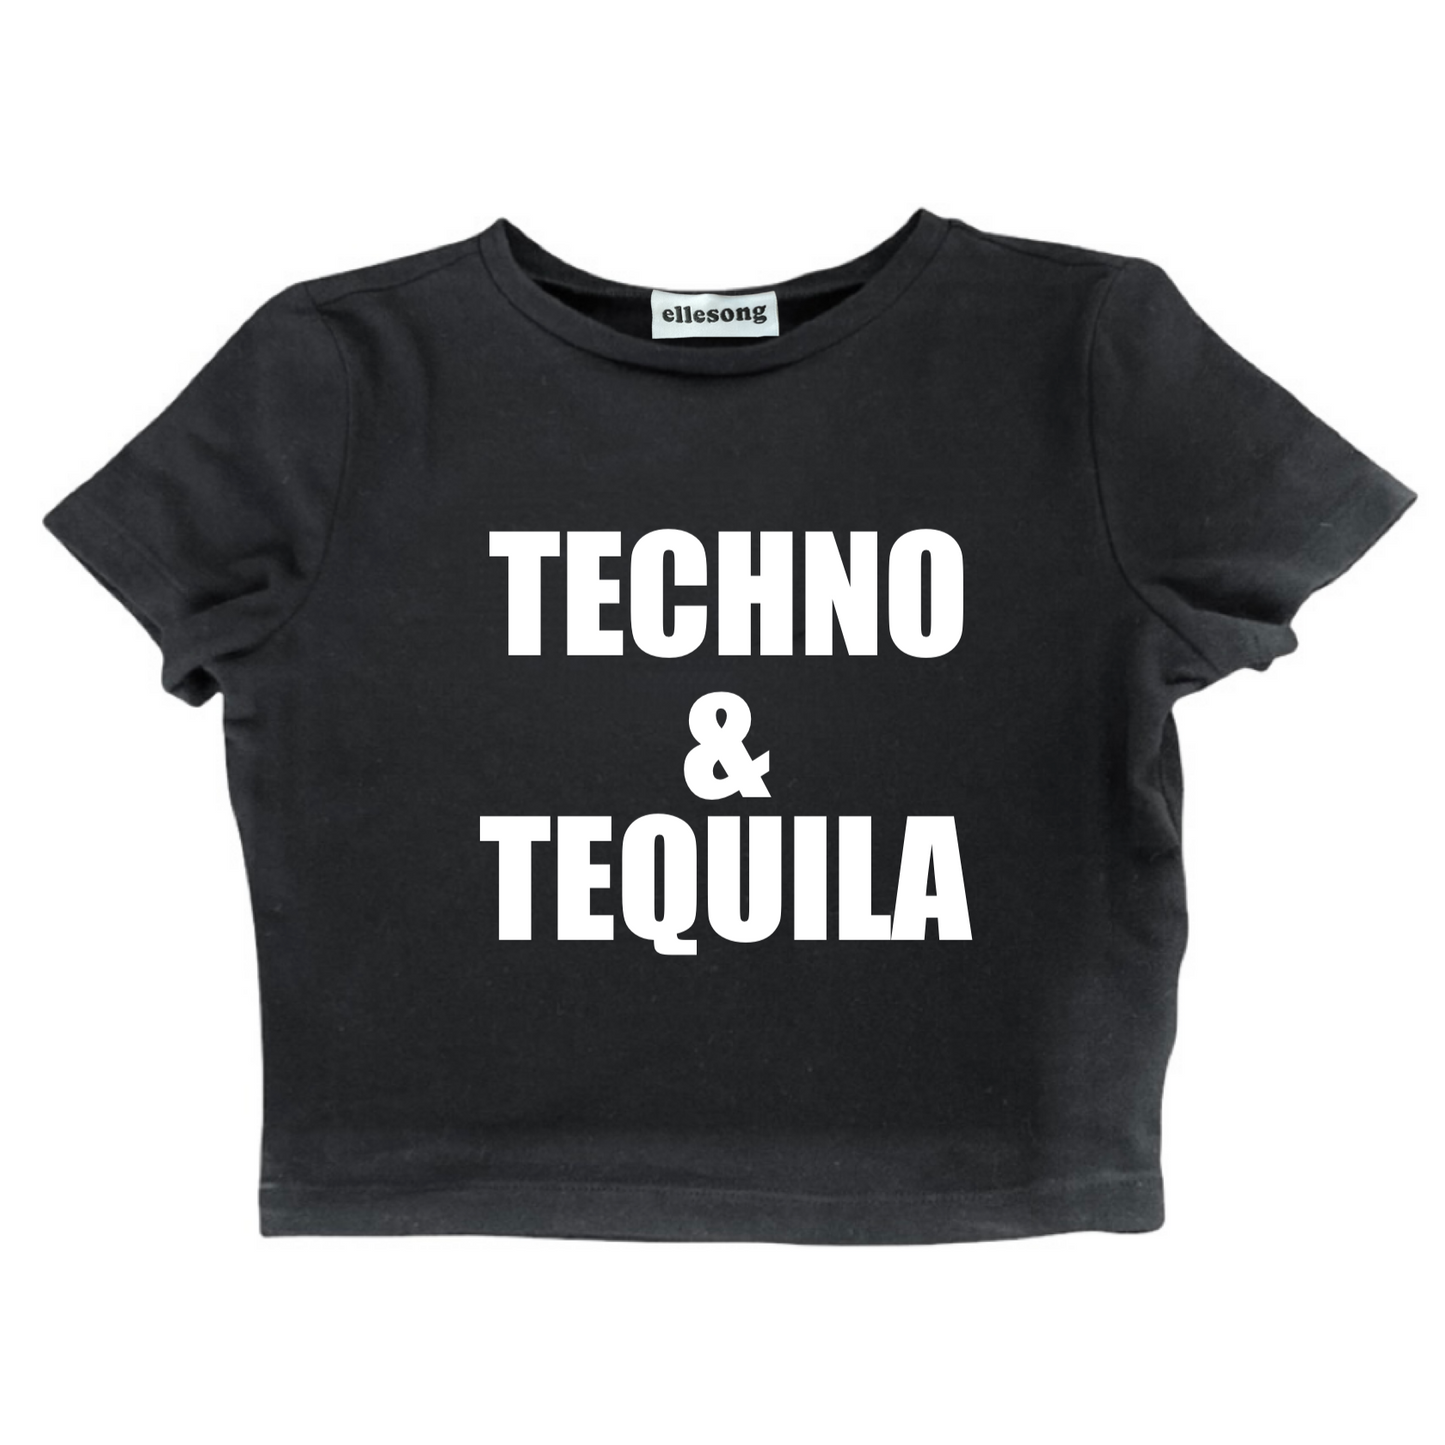 Techno & Tequila Baby Tee